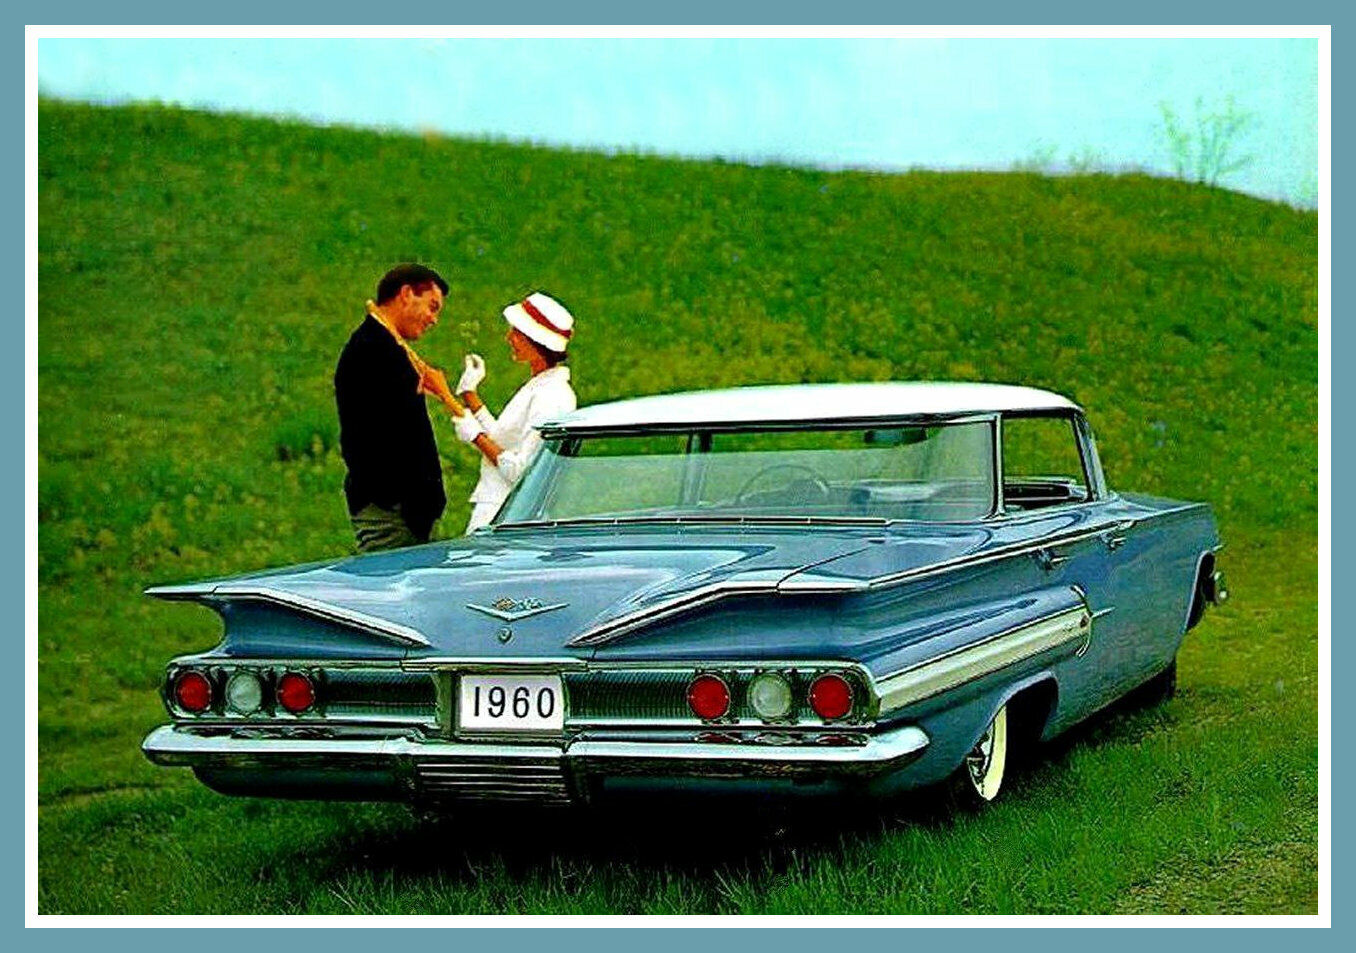 1960 Chevrolet Impala 4 door flatop, Blue/White, Refrigerator Magnet, 42 MIL